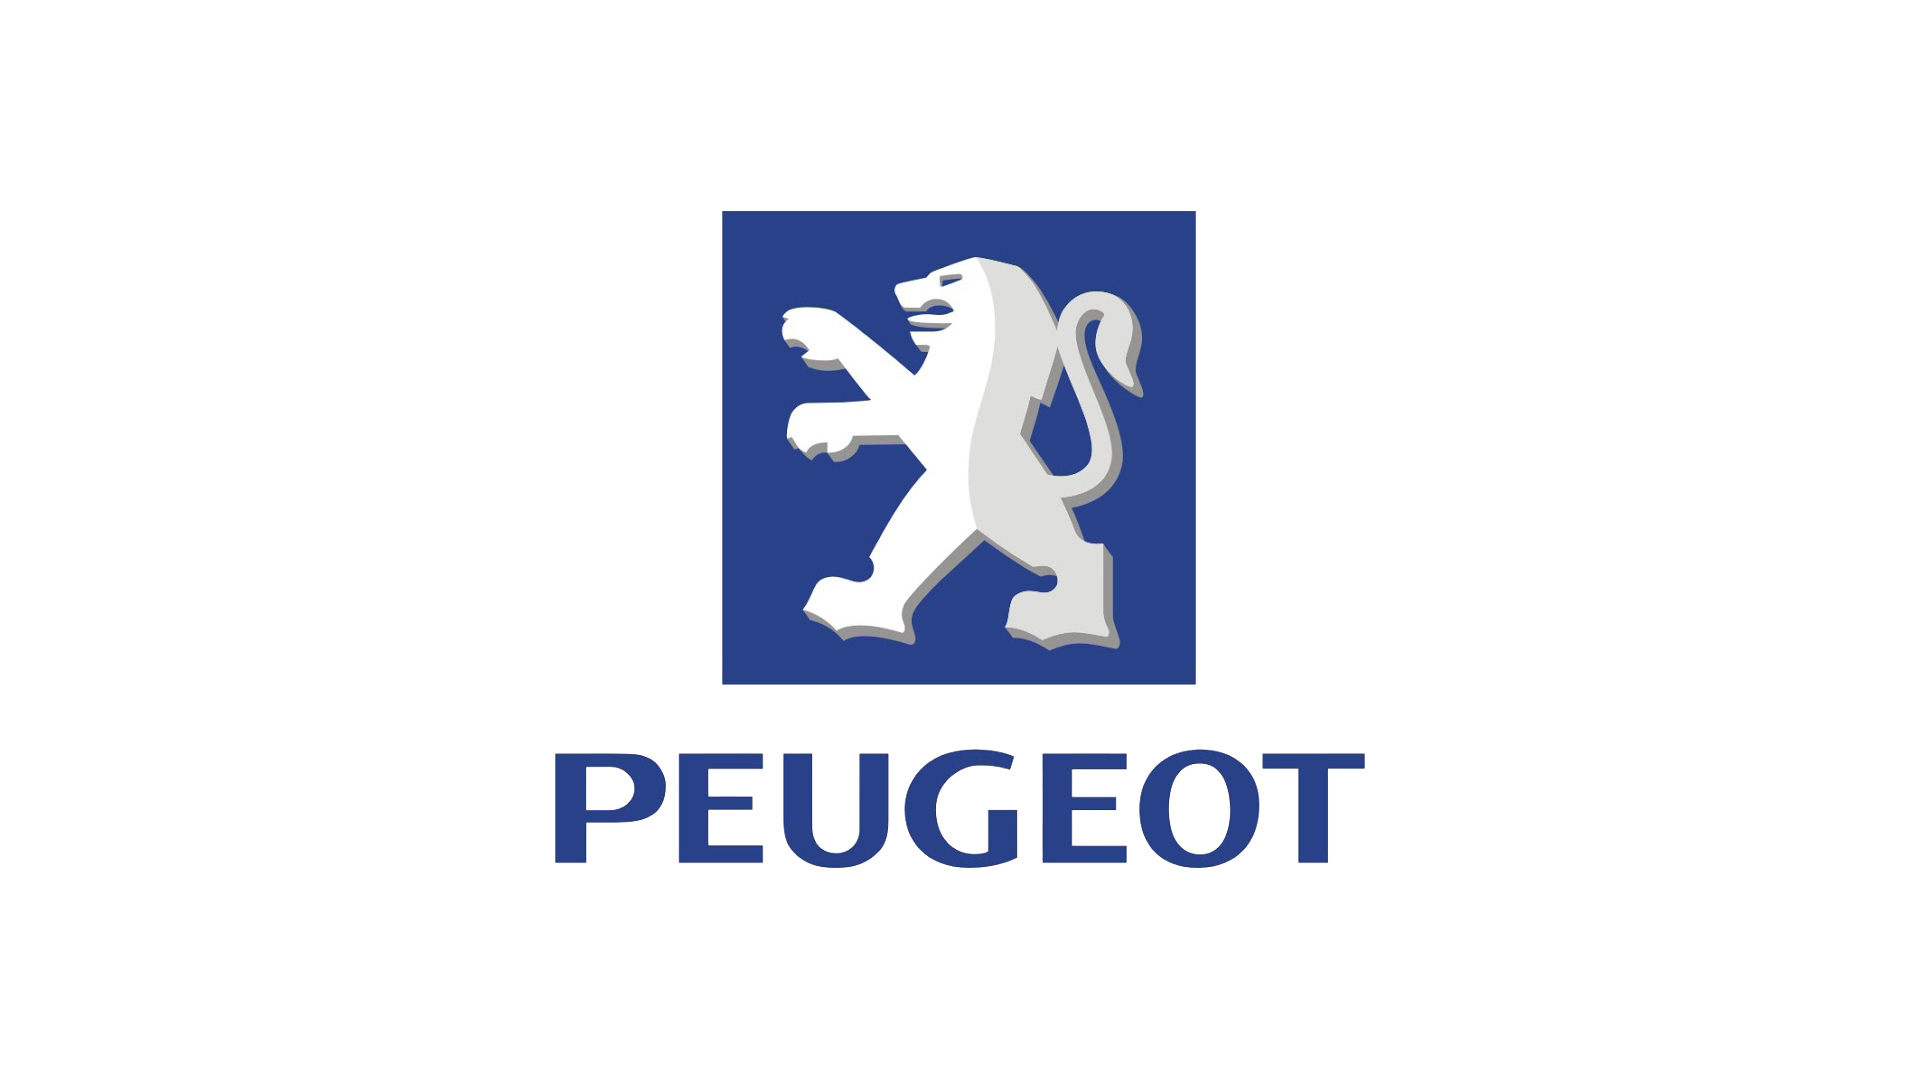 Peugeot Logo Brand Symbol With Name Black Design French Car